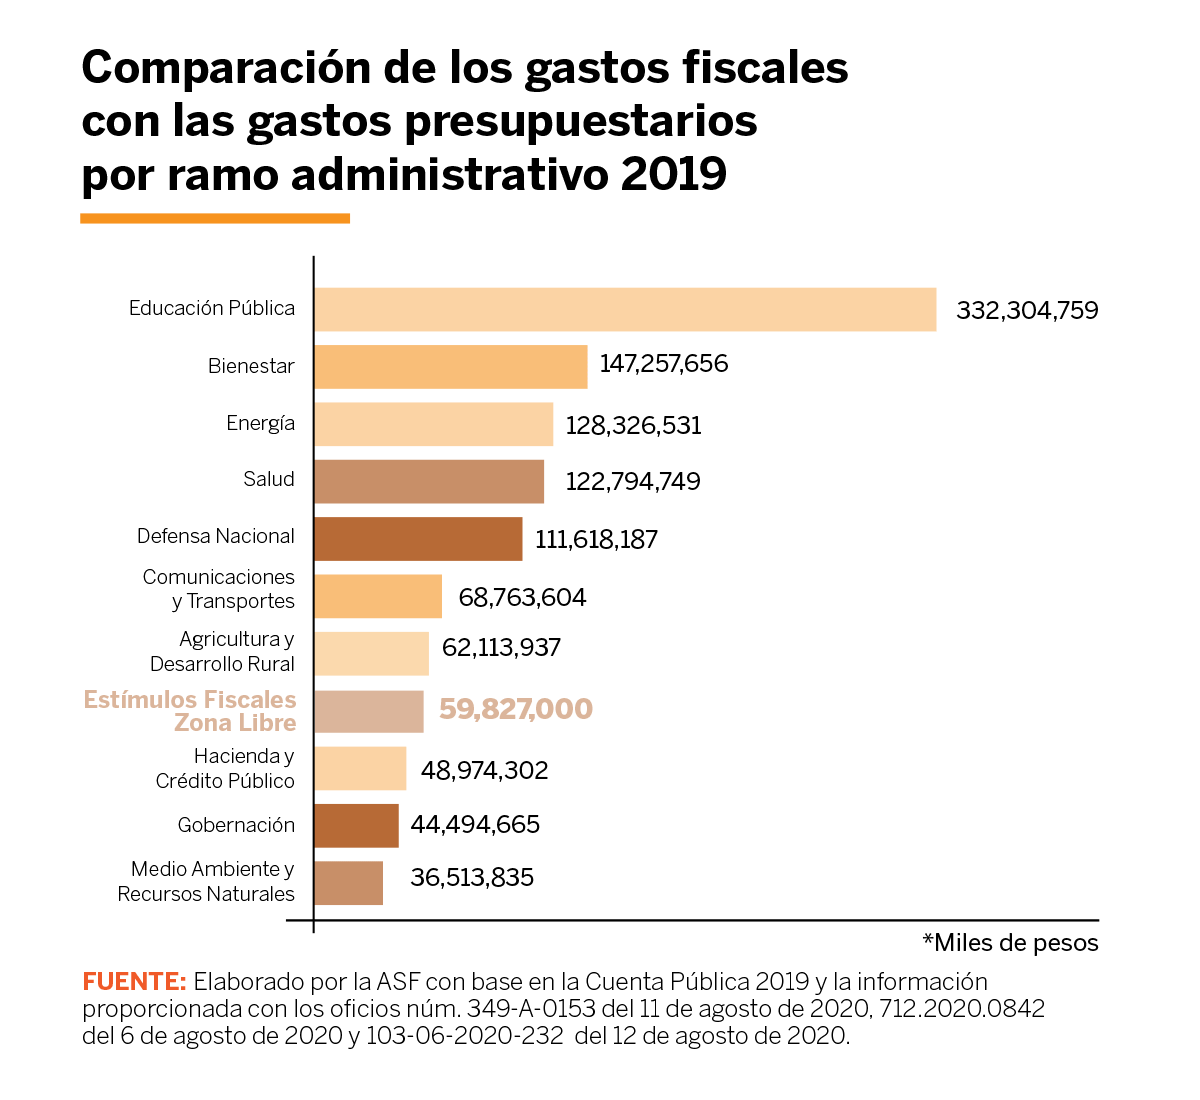 Grafica que compara gastos fiscales por ramo administrativo